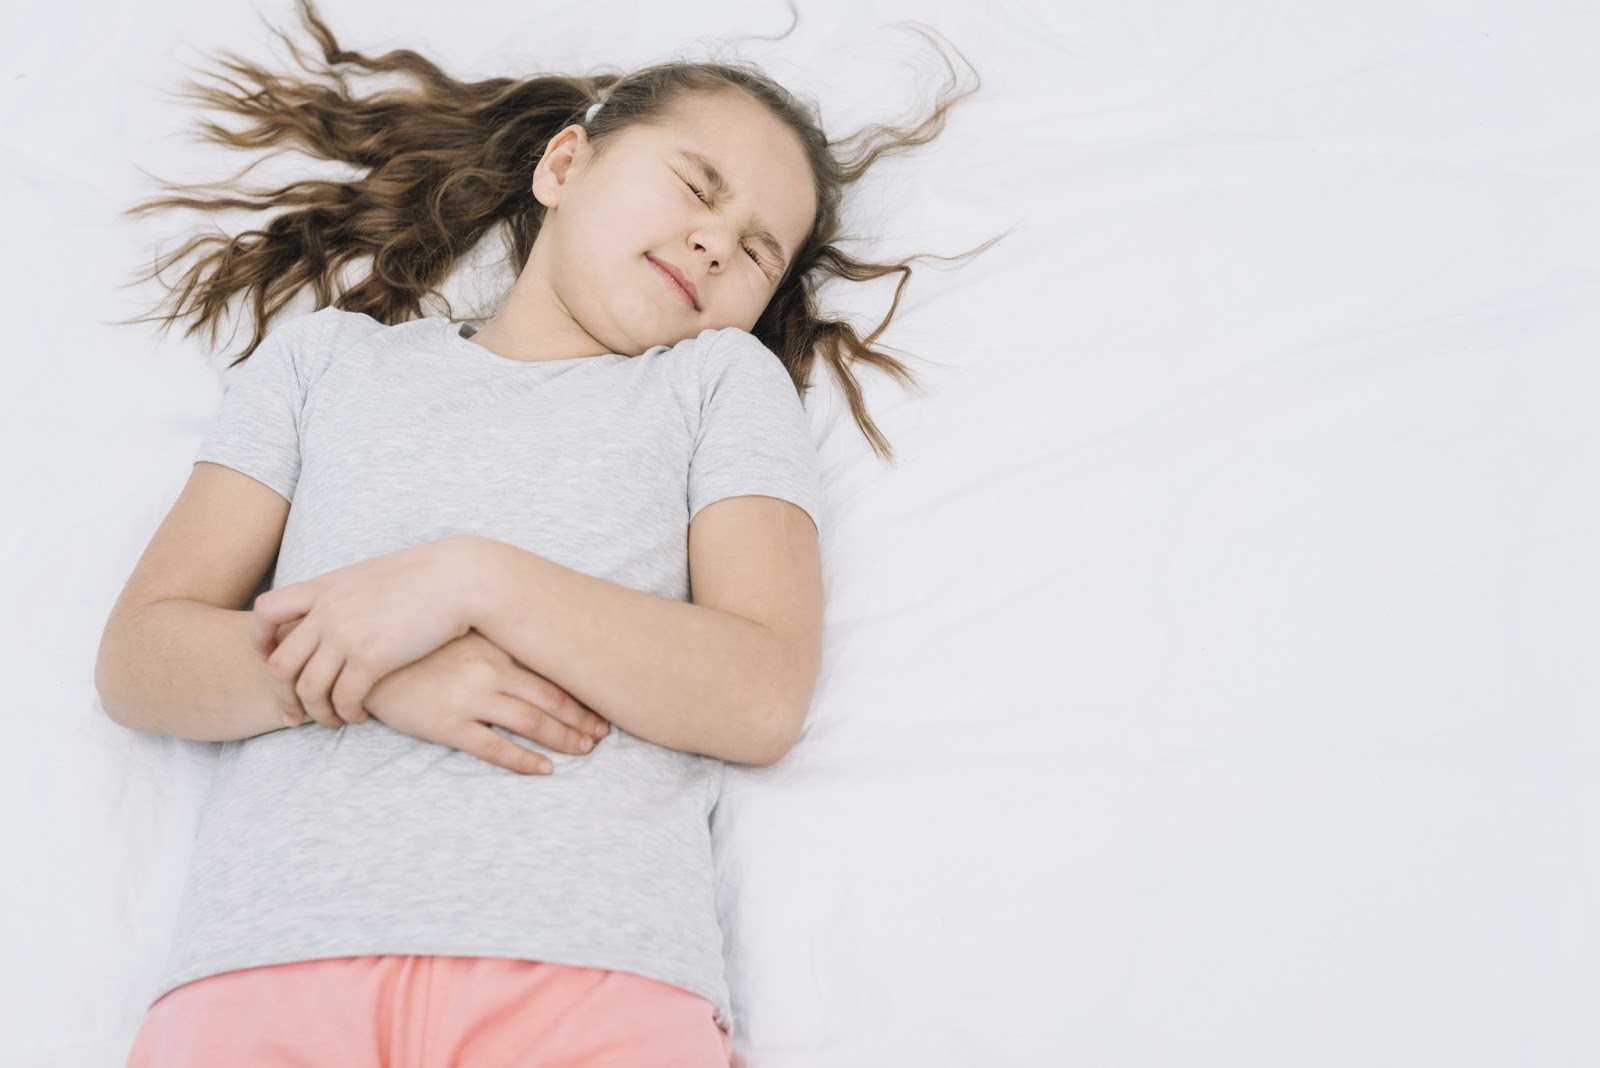 Stomach cramps in children home remedies